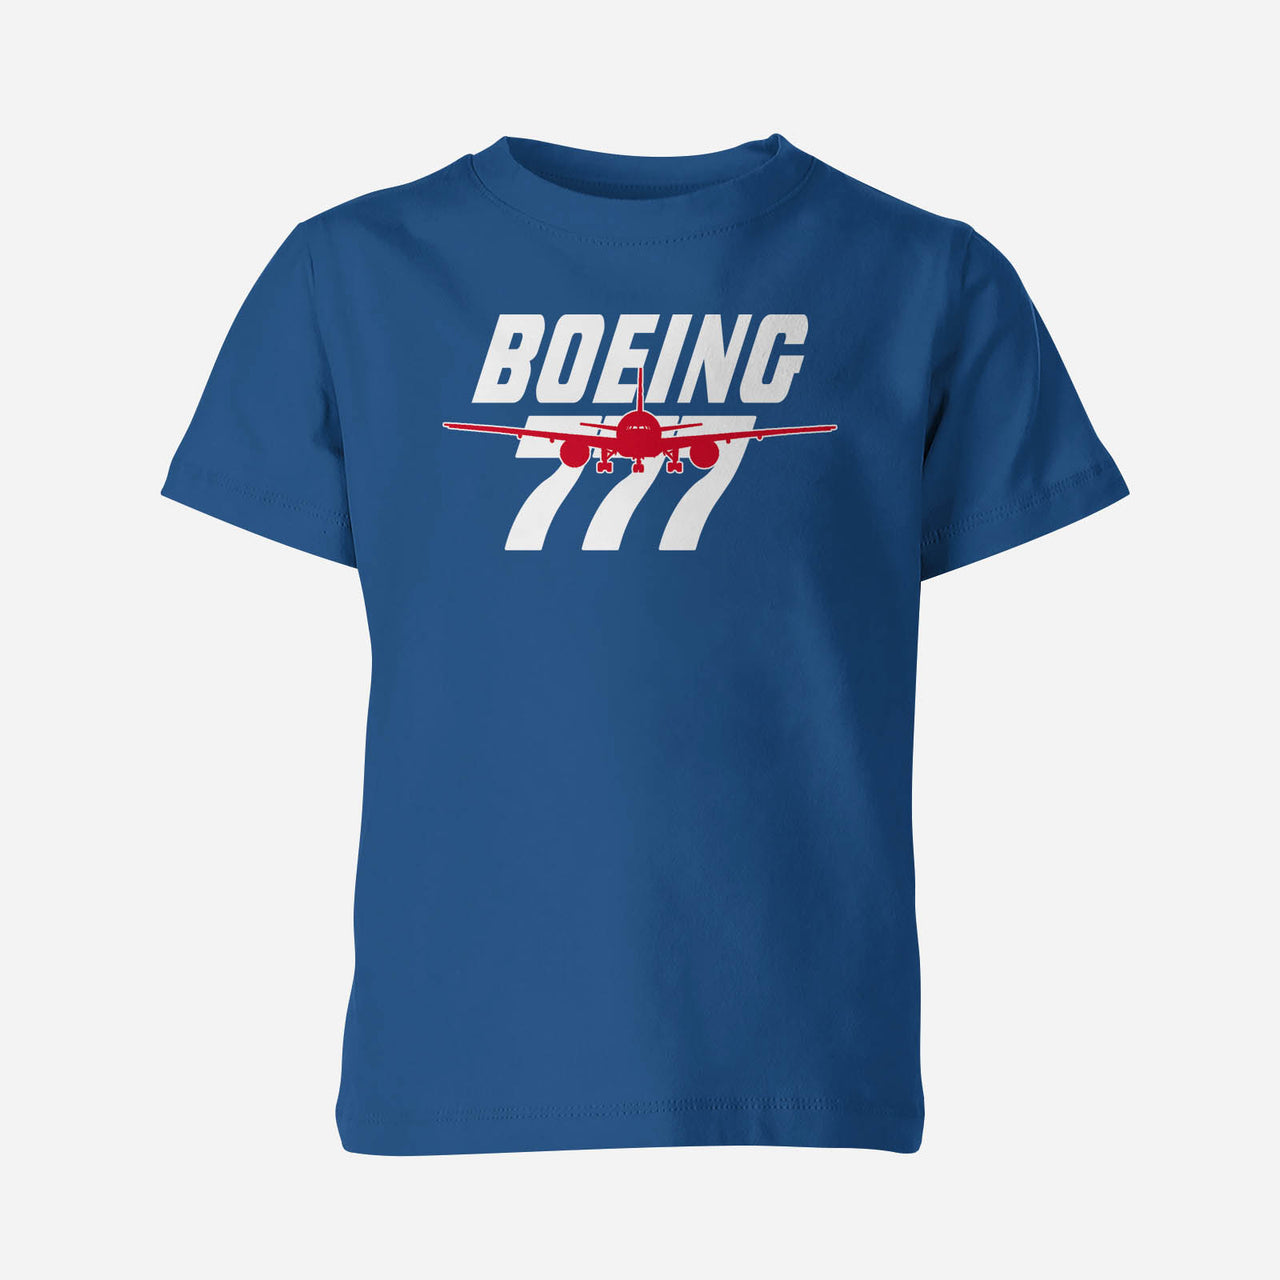 Amazing Boeing 777 Designed Children T-Shirts